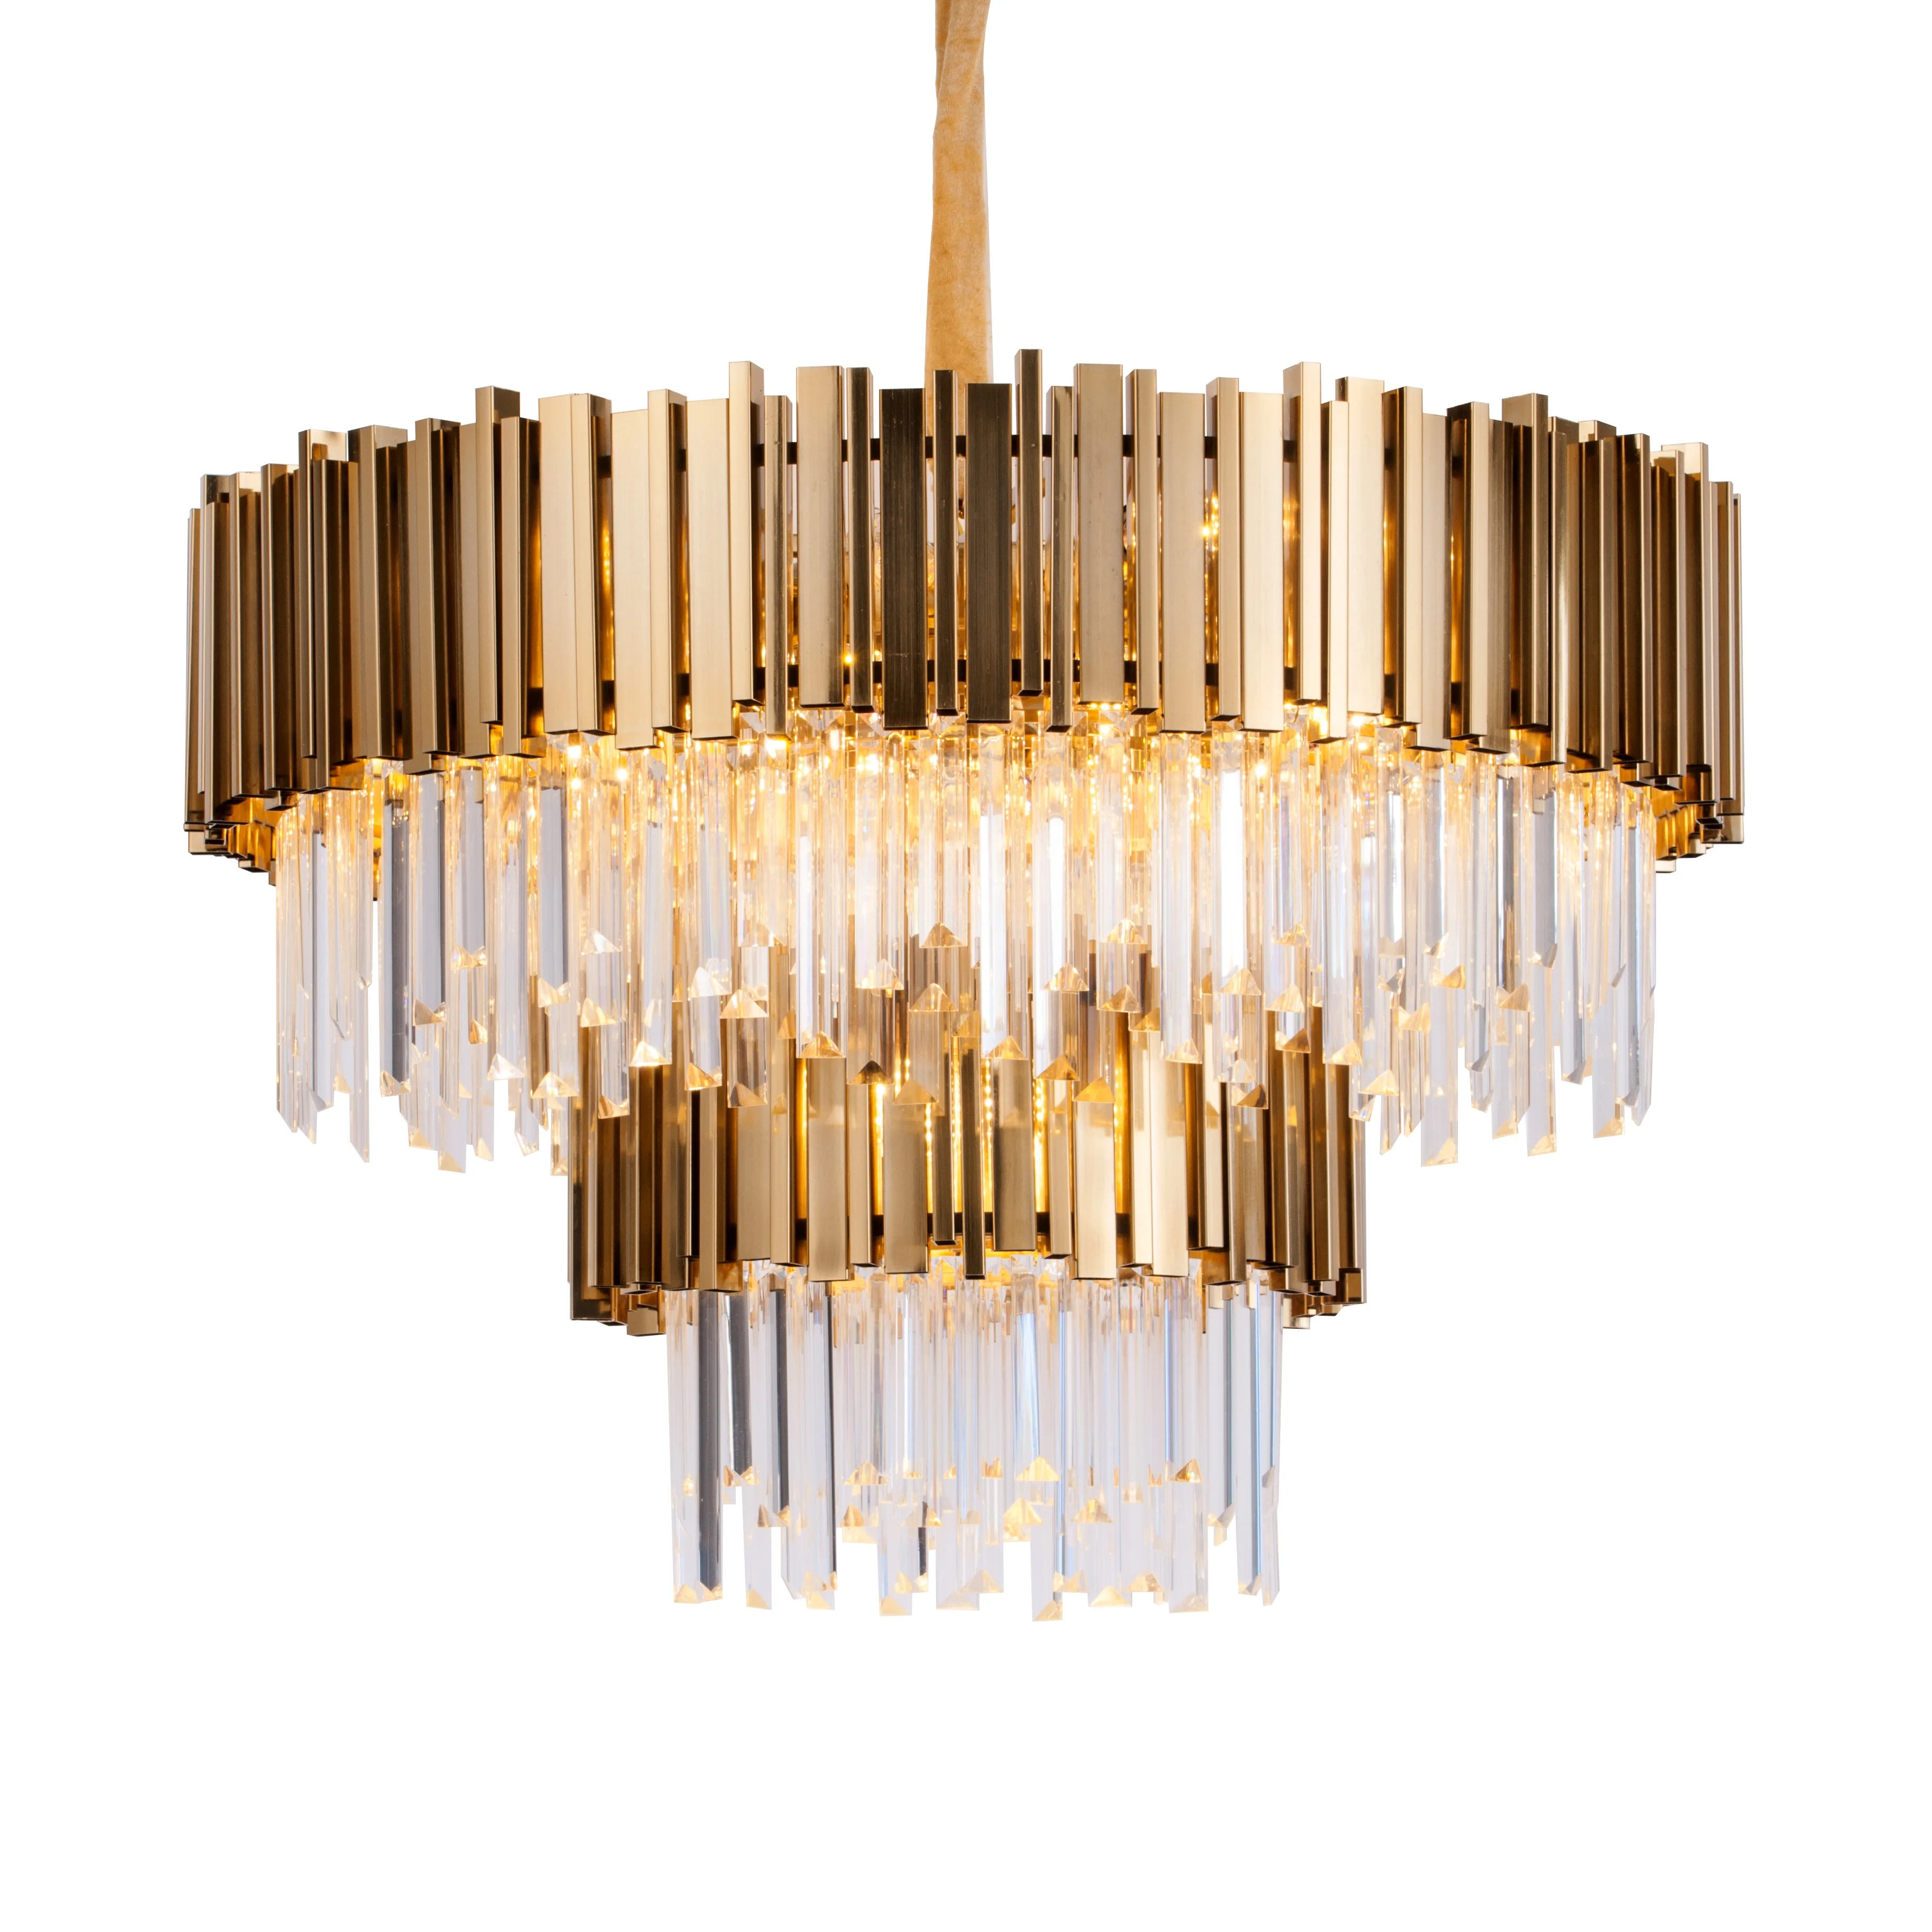 Round large gold k9 wedding decorative pendant lights modern luxury crystal chandelier